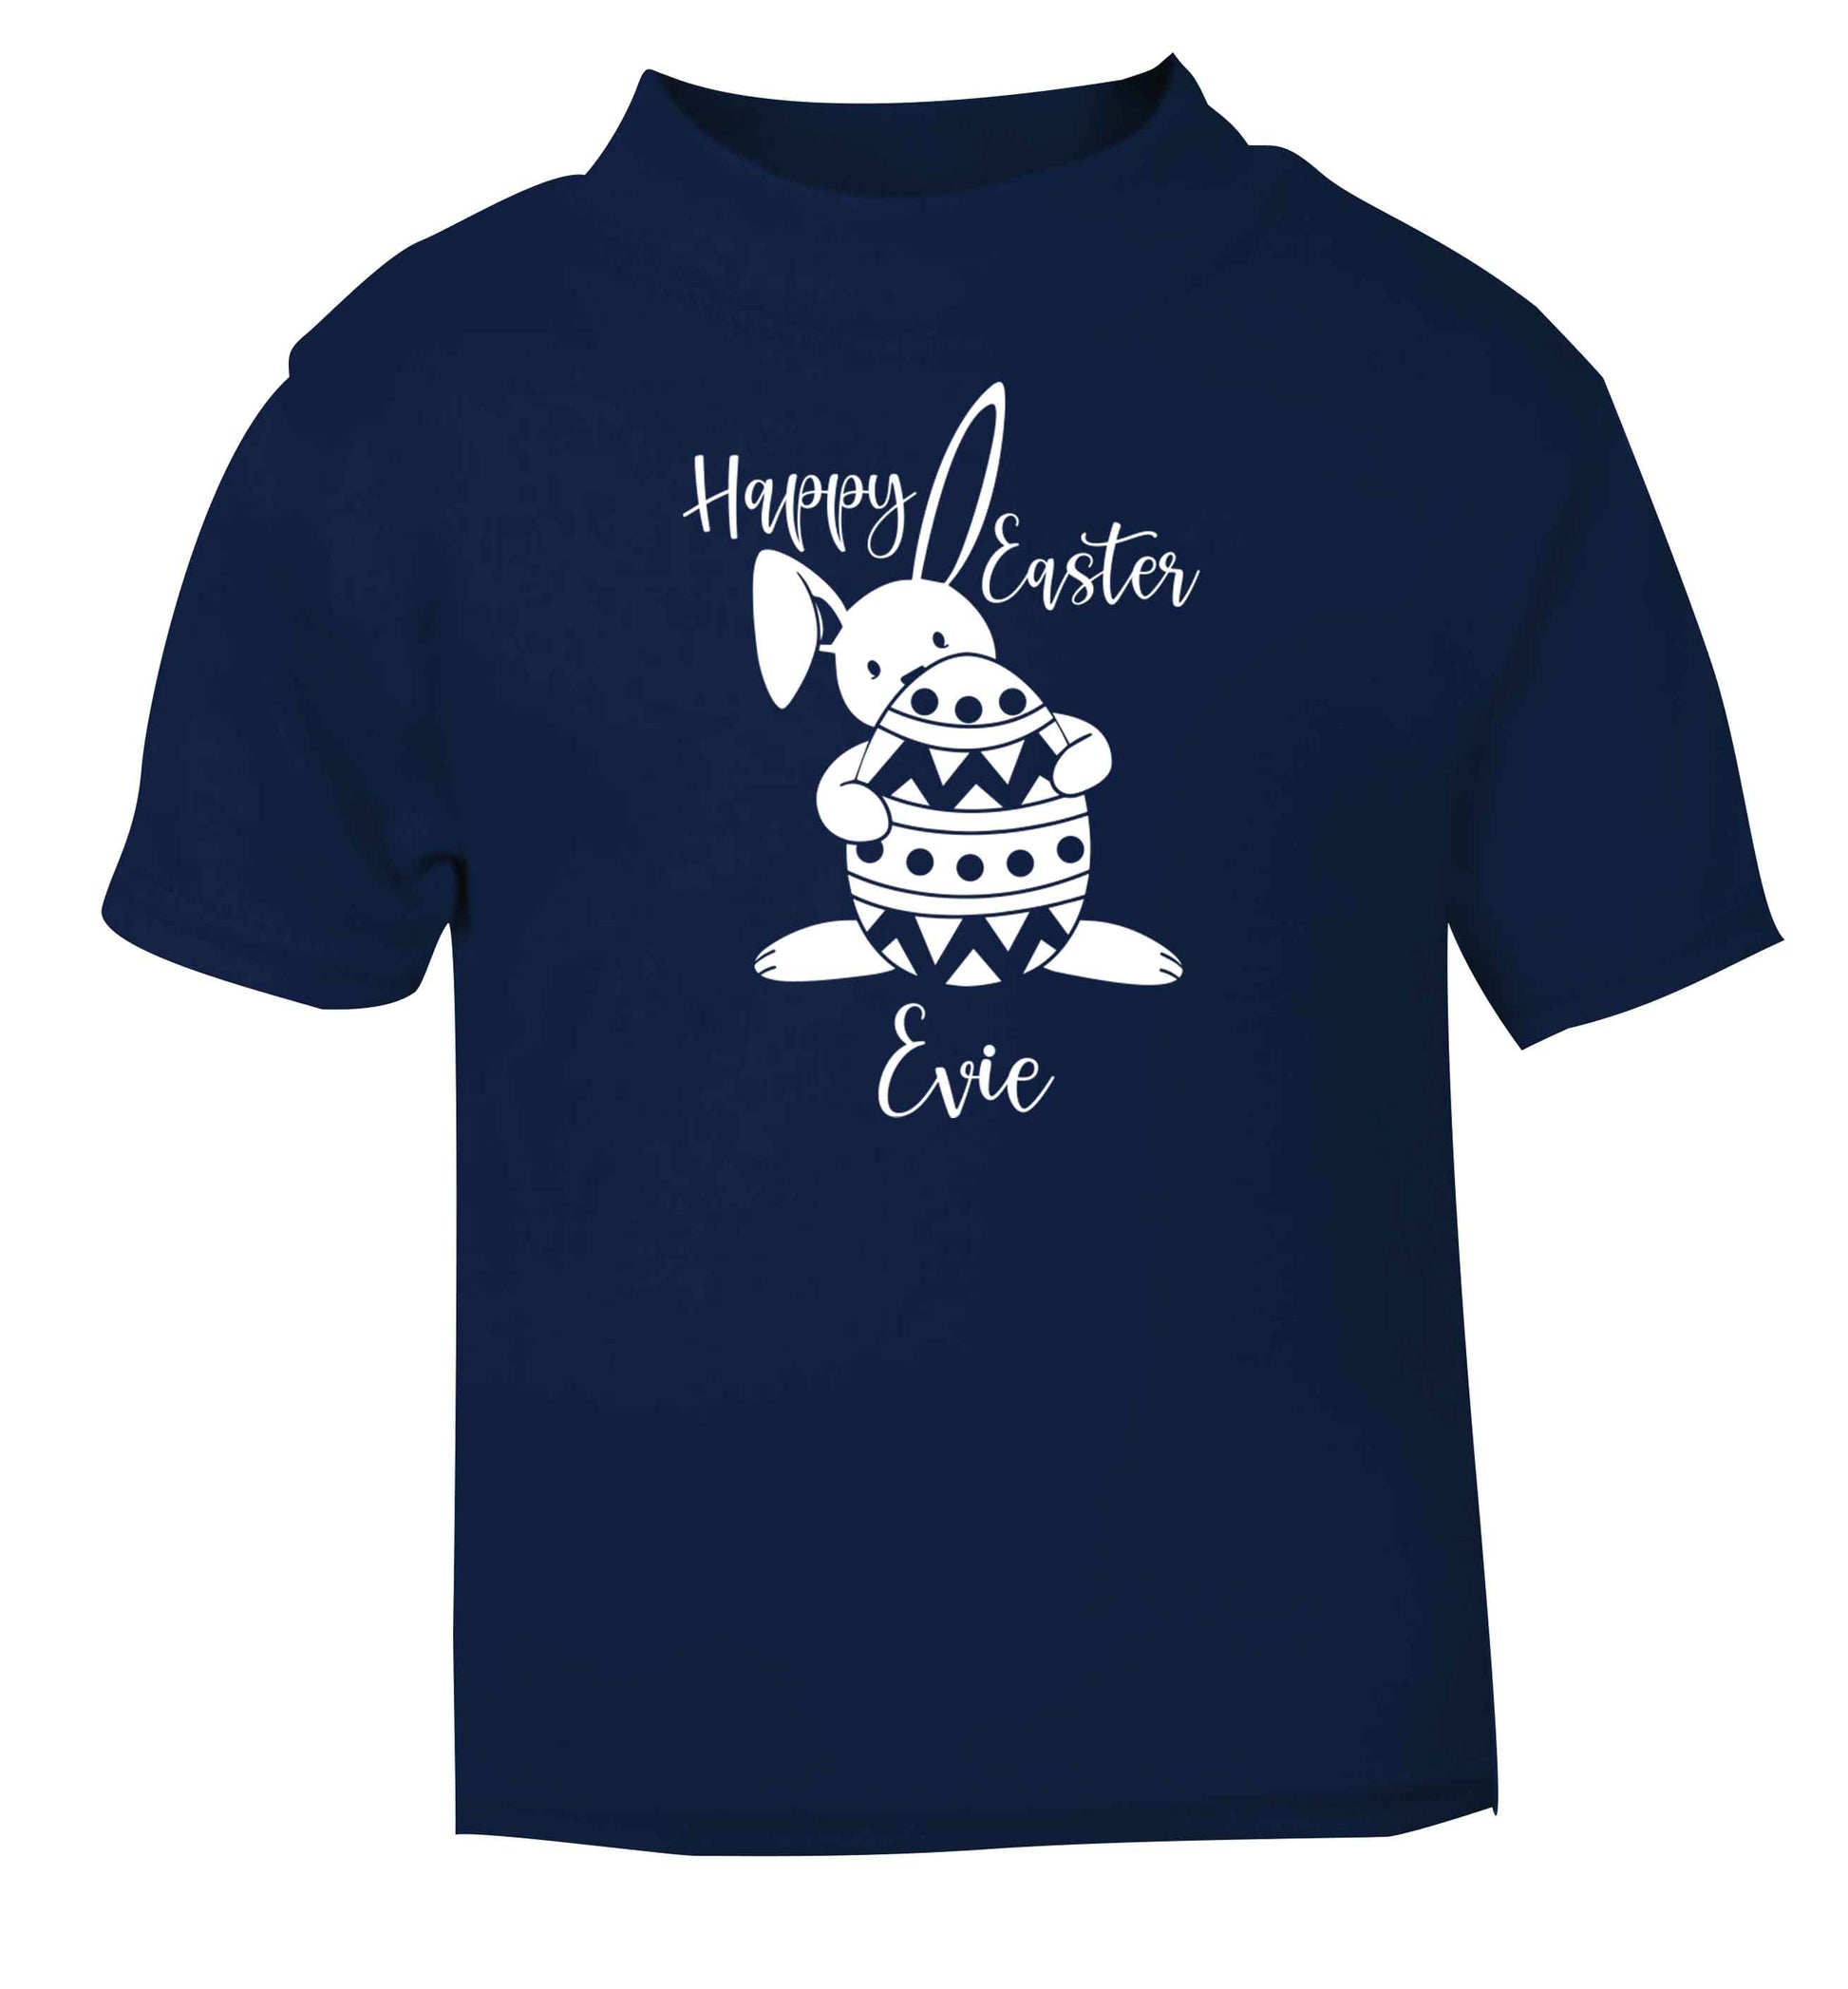 Happy Easter - personalised navy baby toddler Tshirt 2 Years